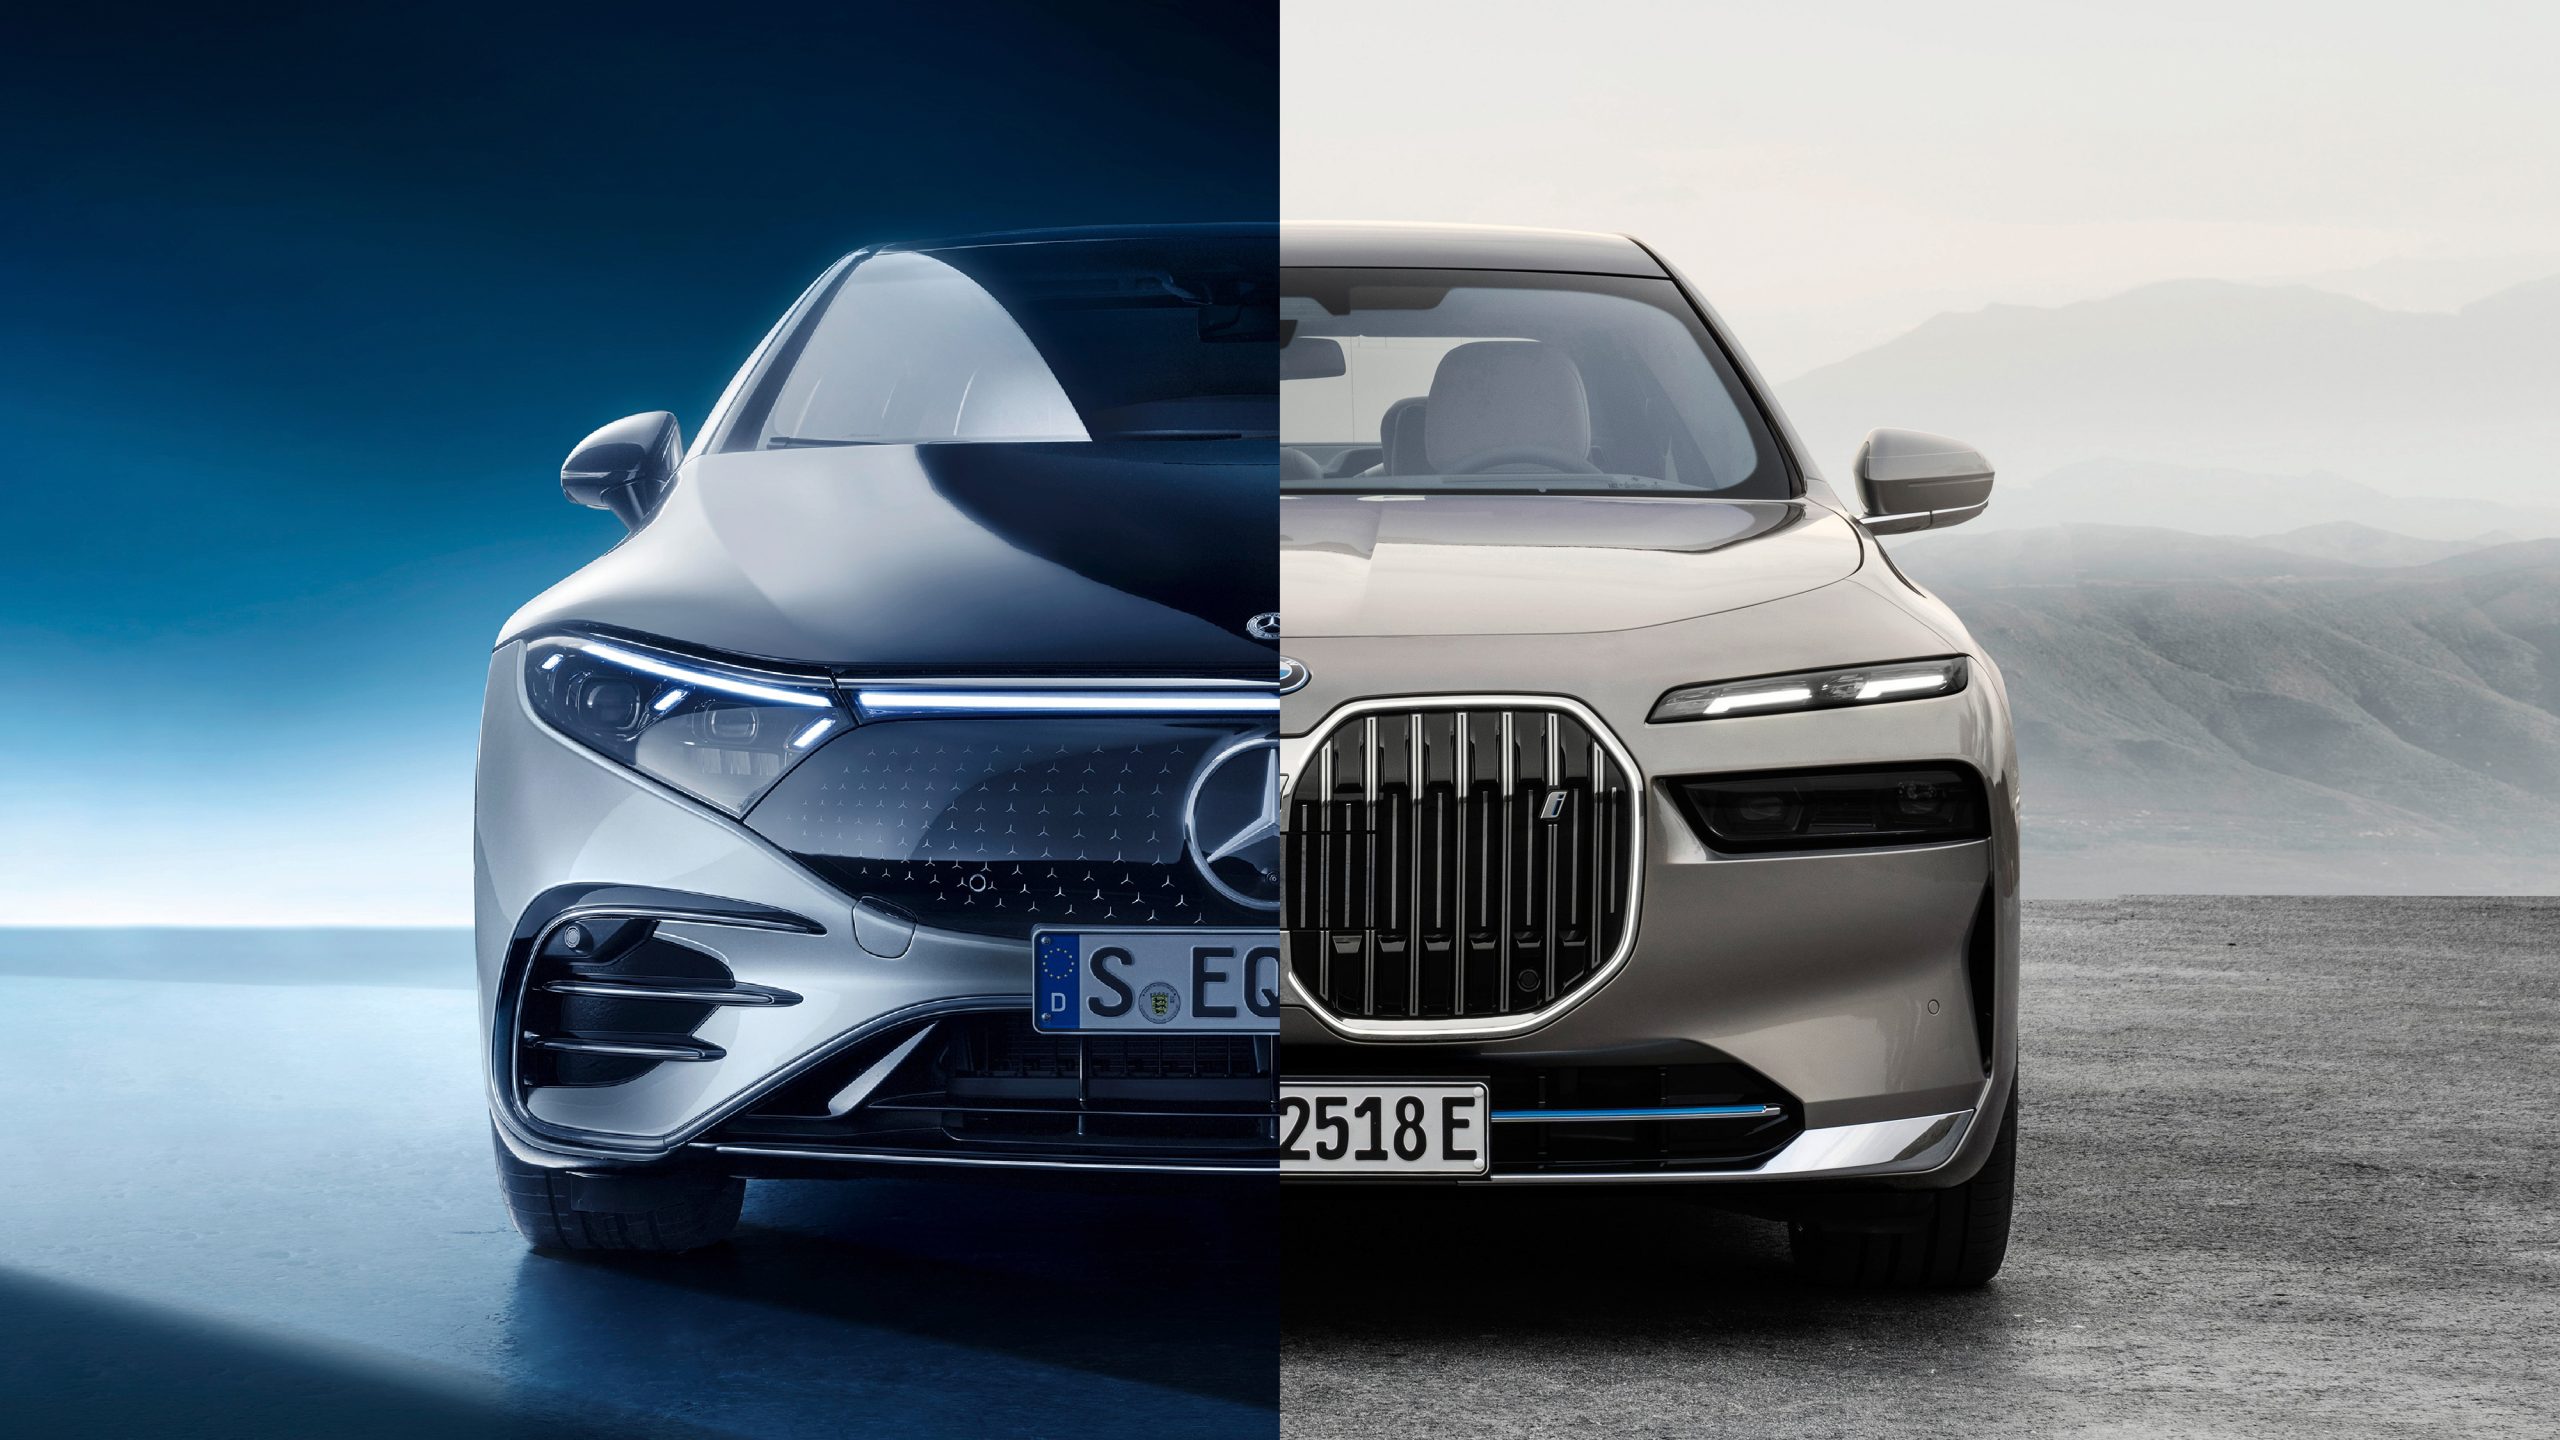 BMW and Mercedes: Opposite Takes on Flagship Sedans